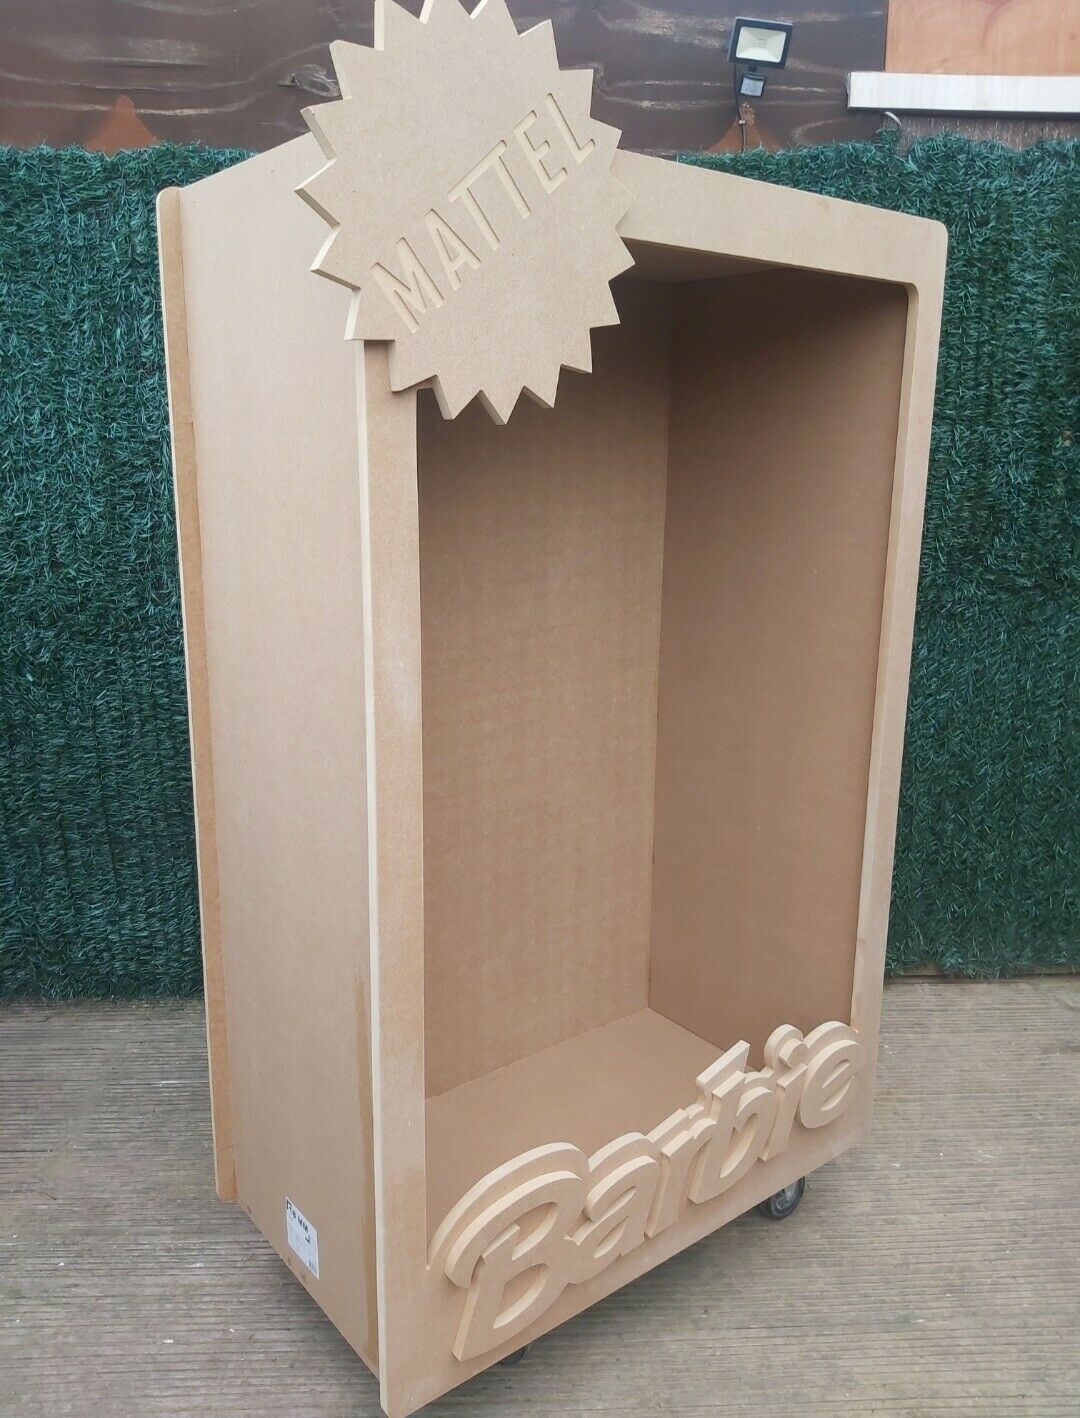 Make a Life-Size Barbie Box Photo Booth 